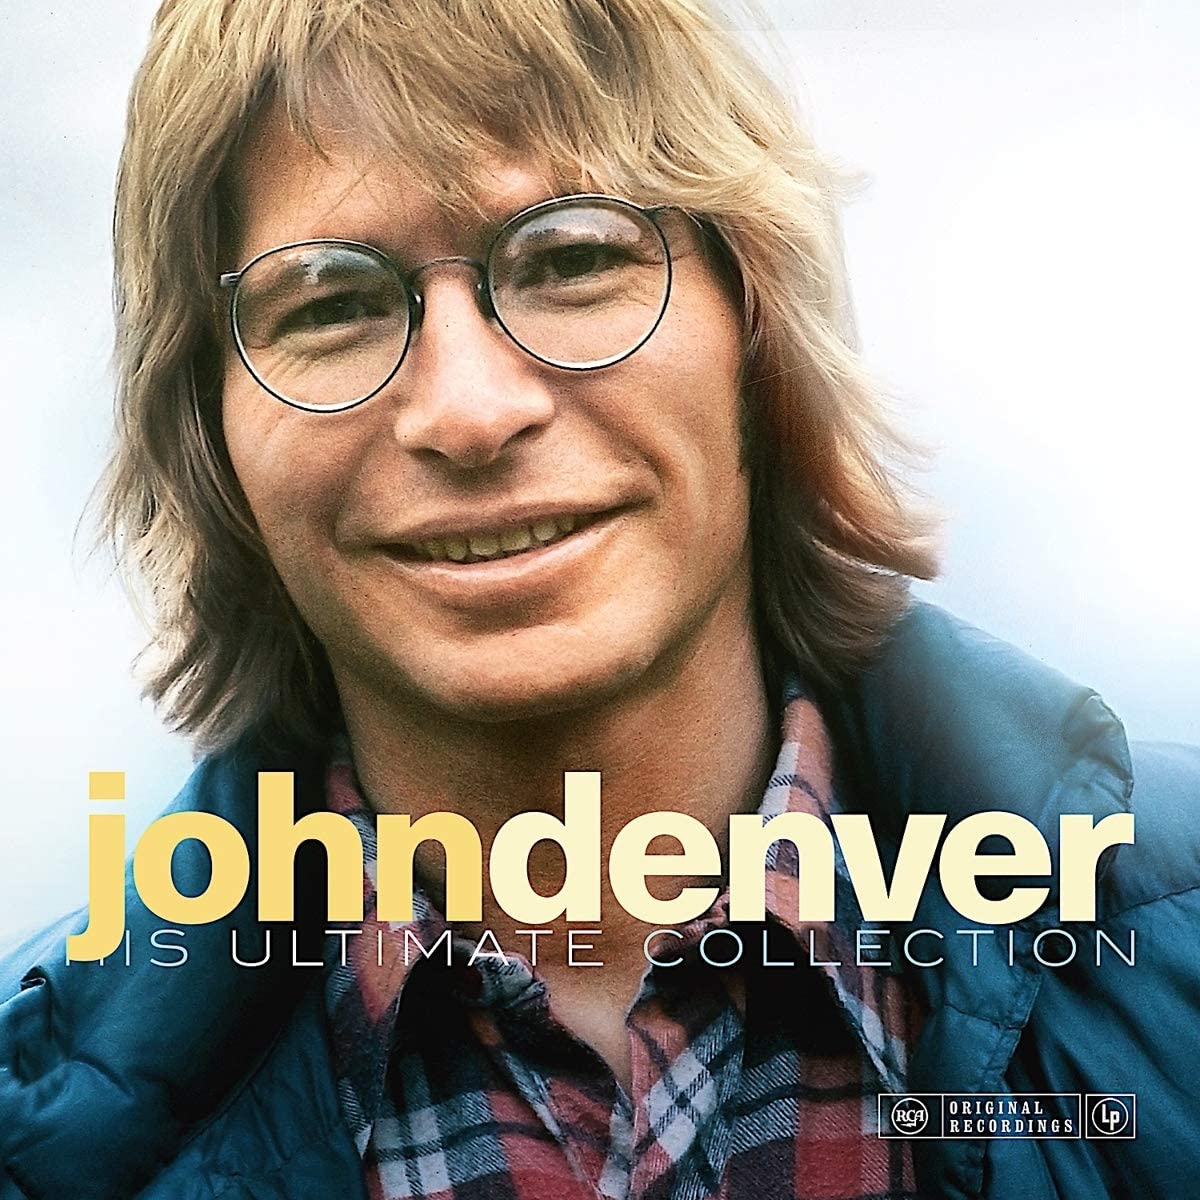 John Denver His Ultimate Collection